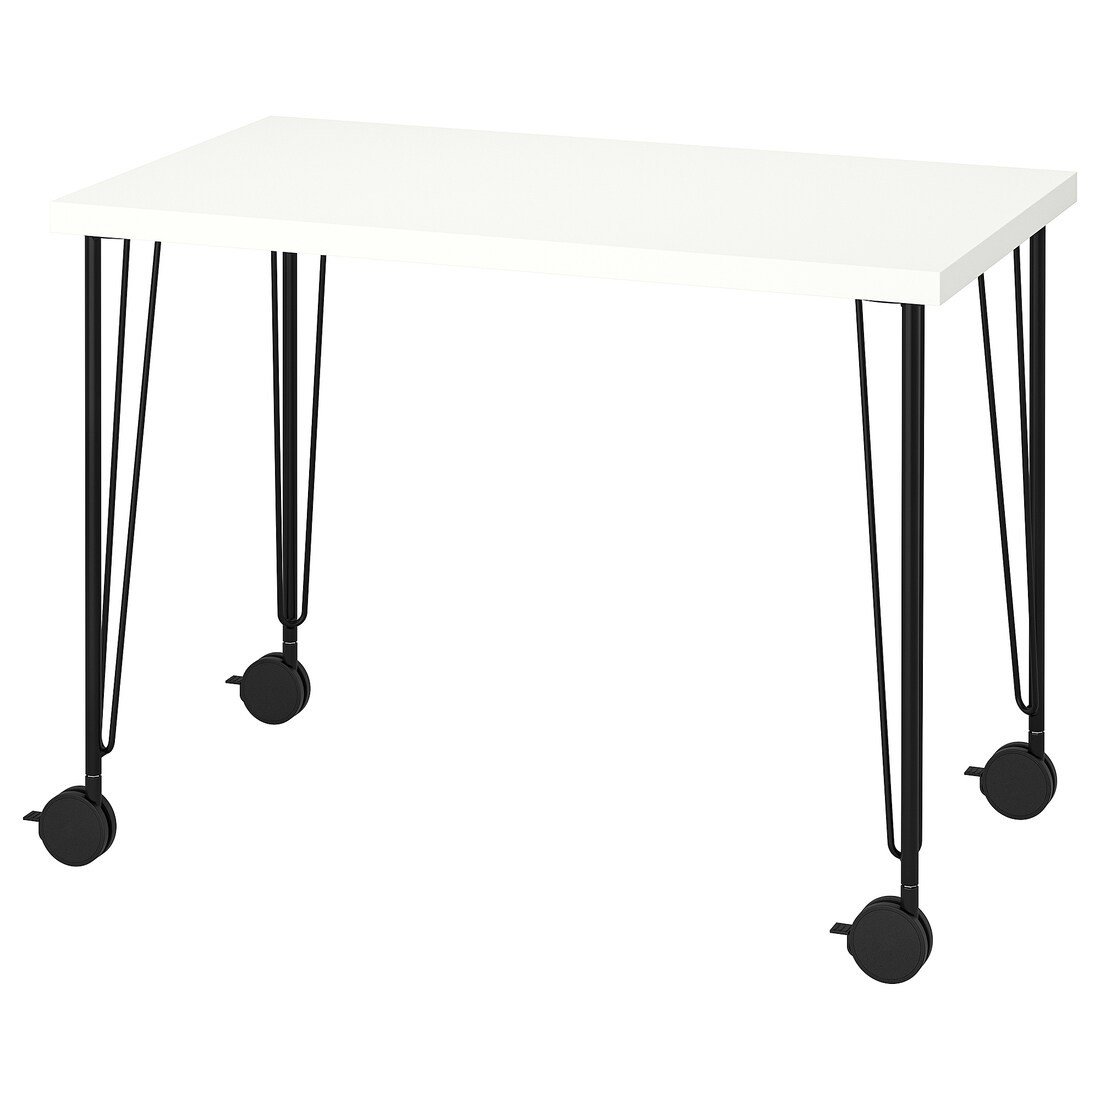 IKEA LINNMON / KRILLE Письменный стол, белый / черный, 100x60 см 89509702 895.097.02